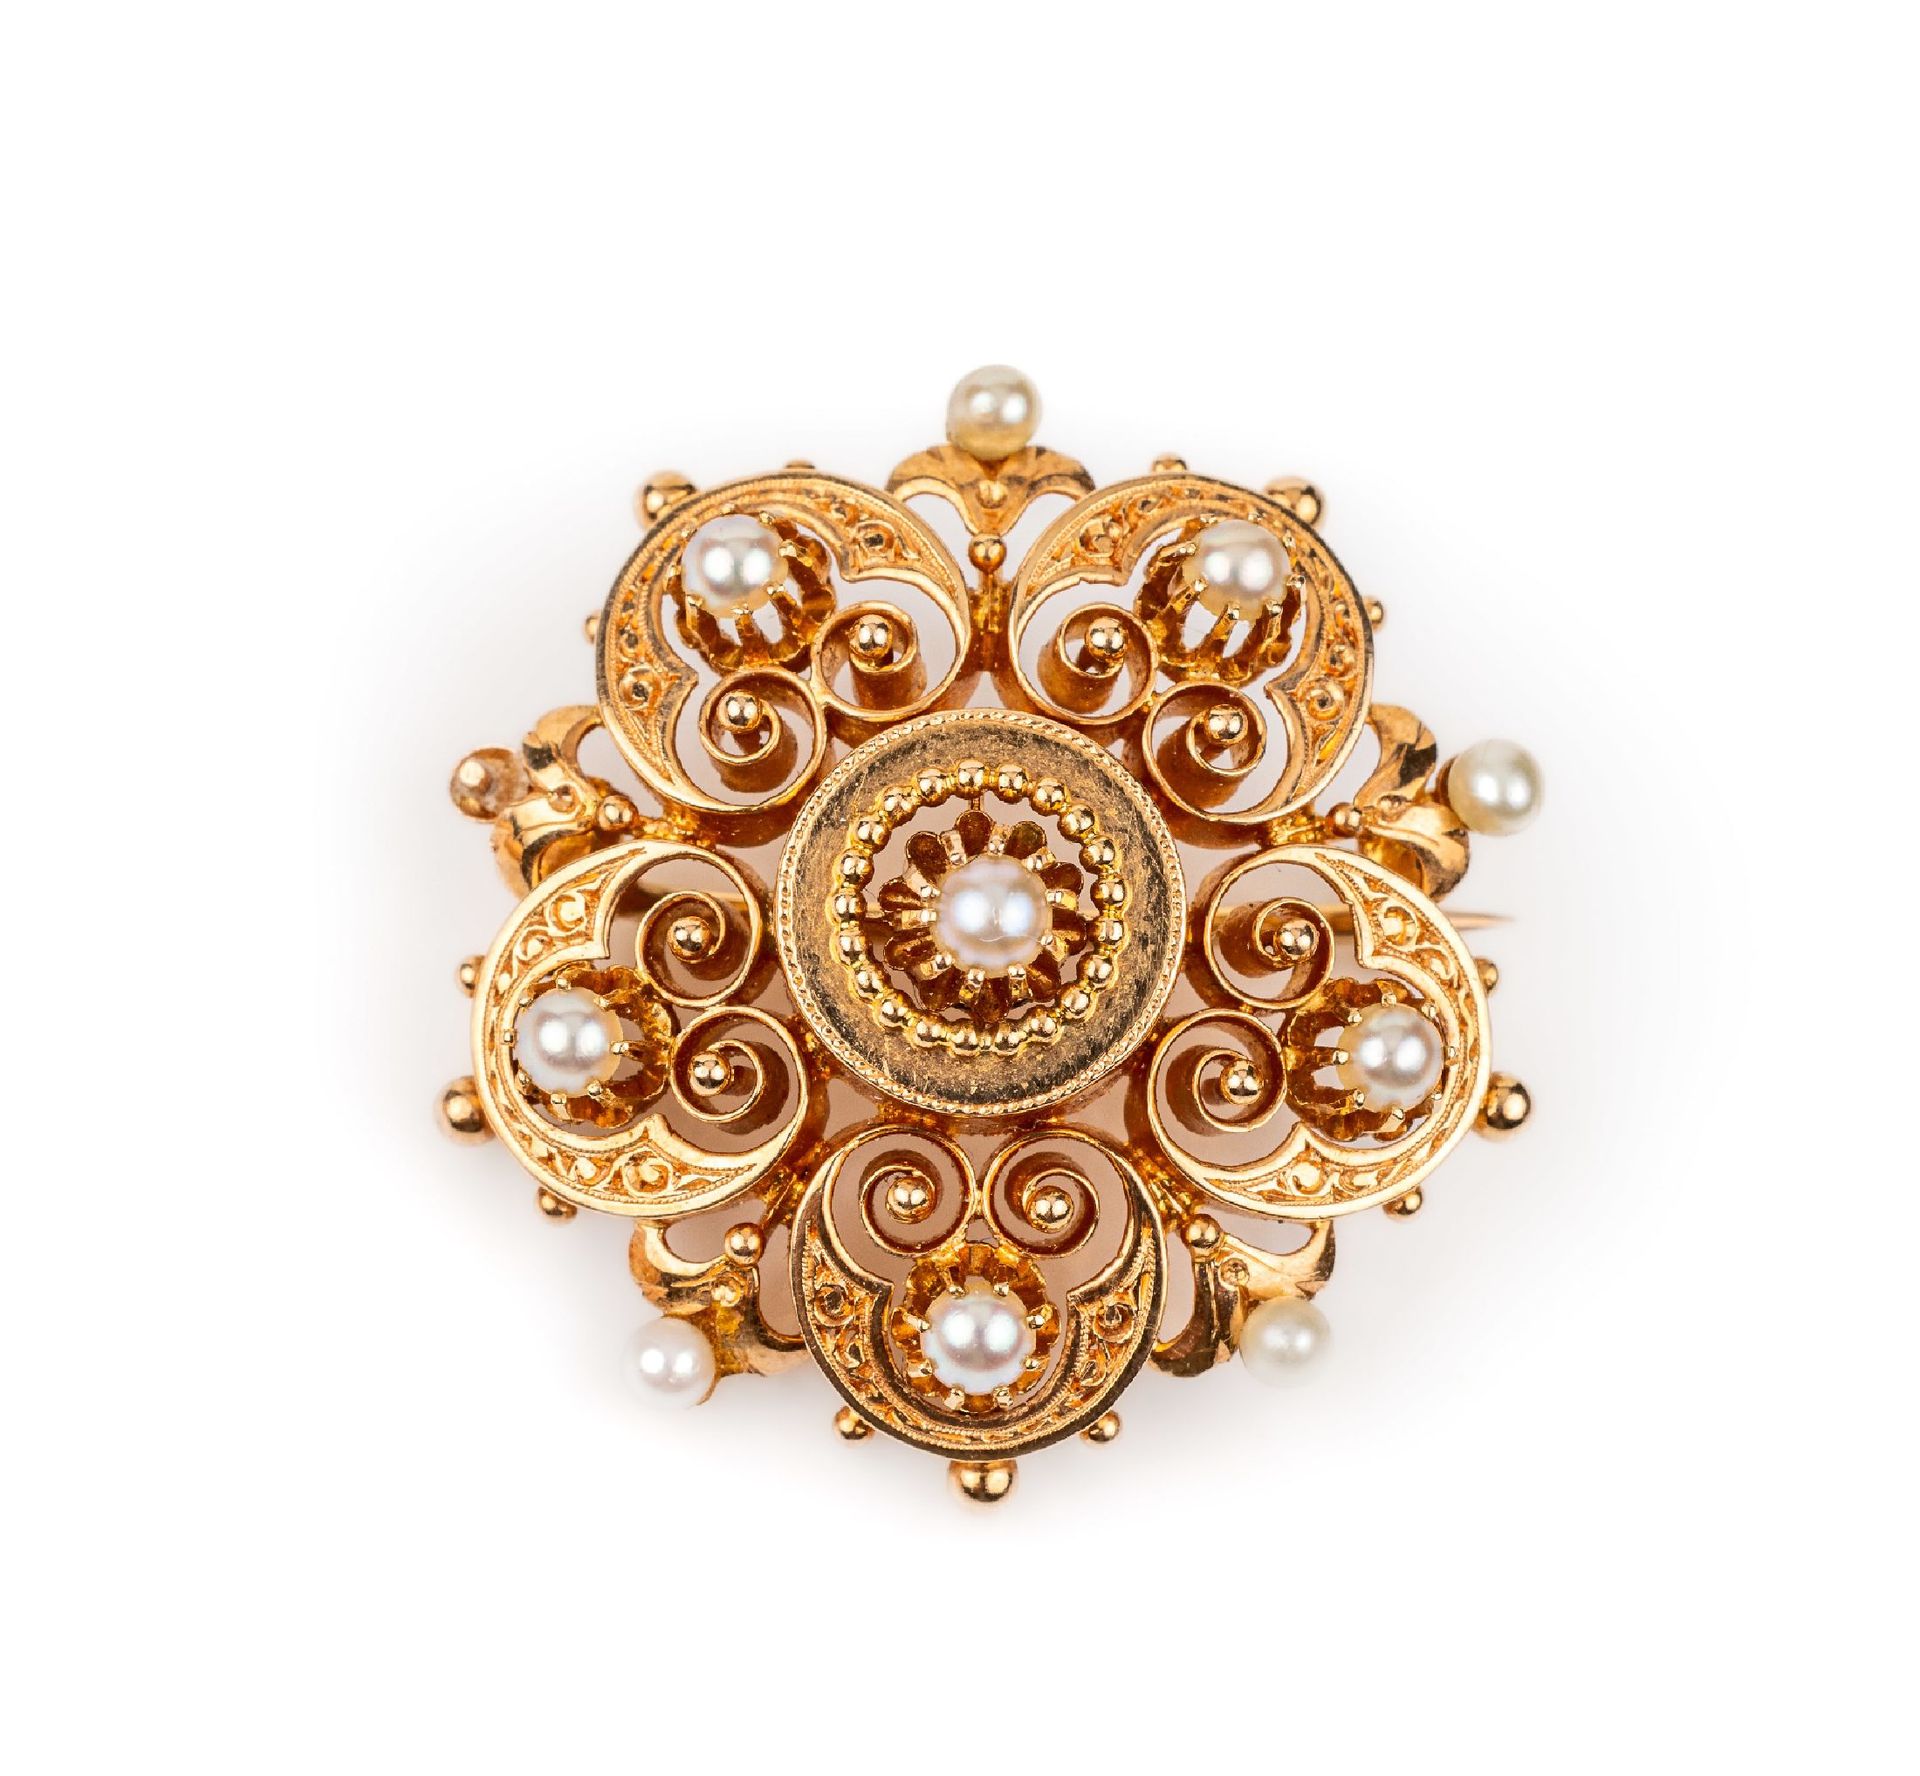 Null 14K金珍珠胸针，RoseG 585/000，约1880年，花形带雕刻，做工精细，半颗珍珠，约2.8 x 3厘米，约6.3克